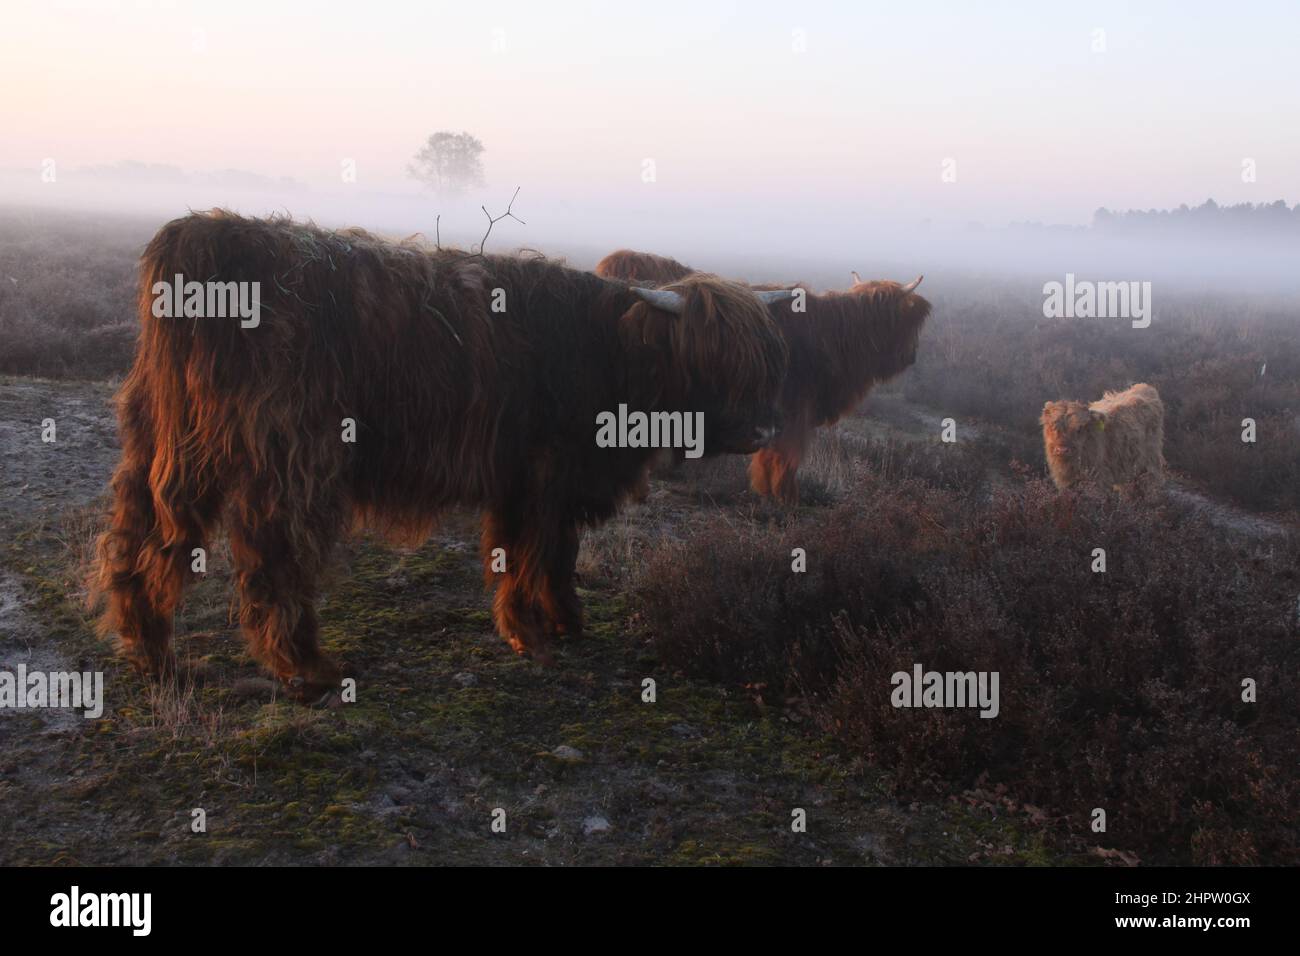 Scottish highlanders in a misty moorland landscape. Stock Photo